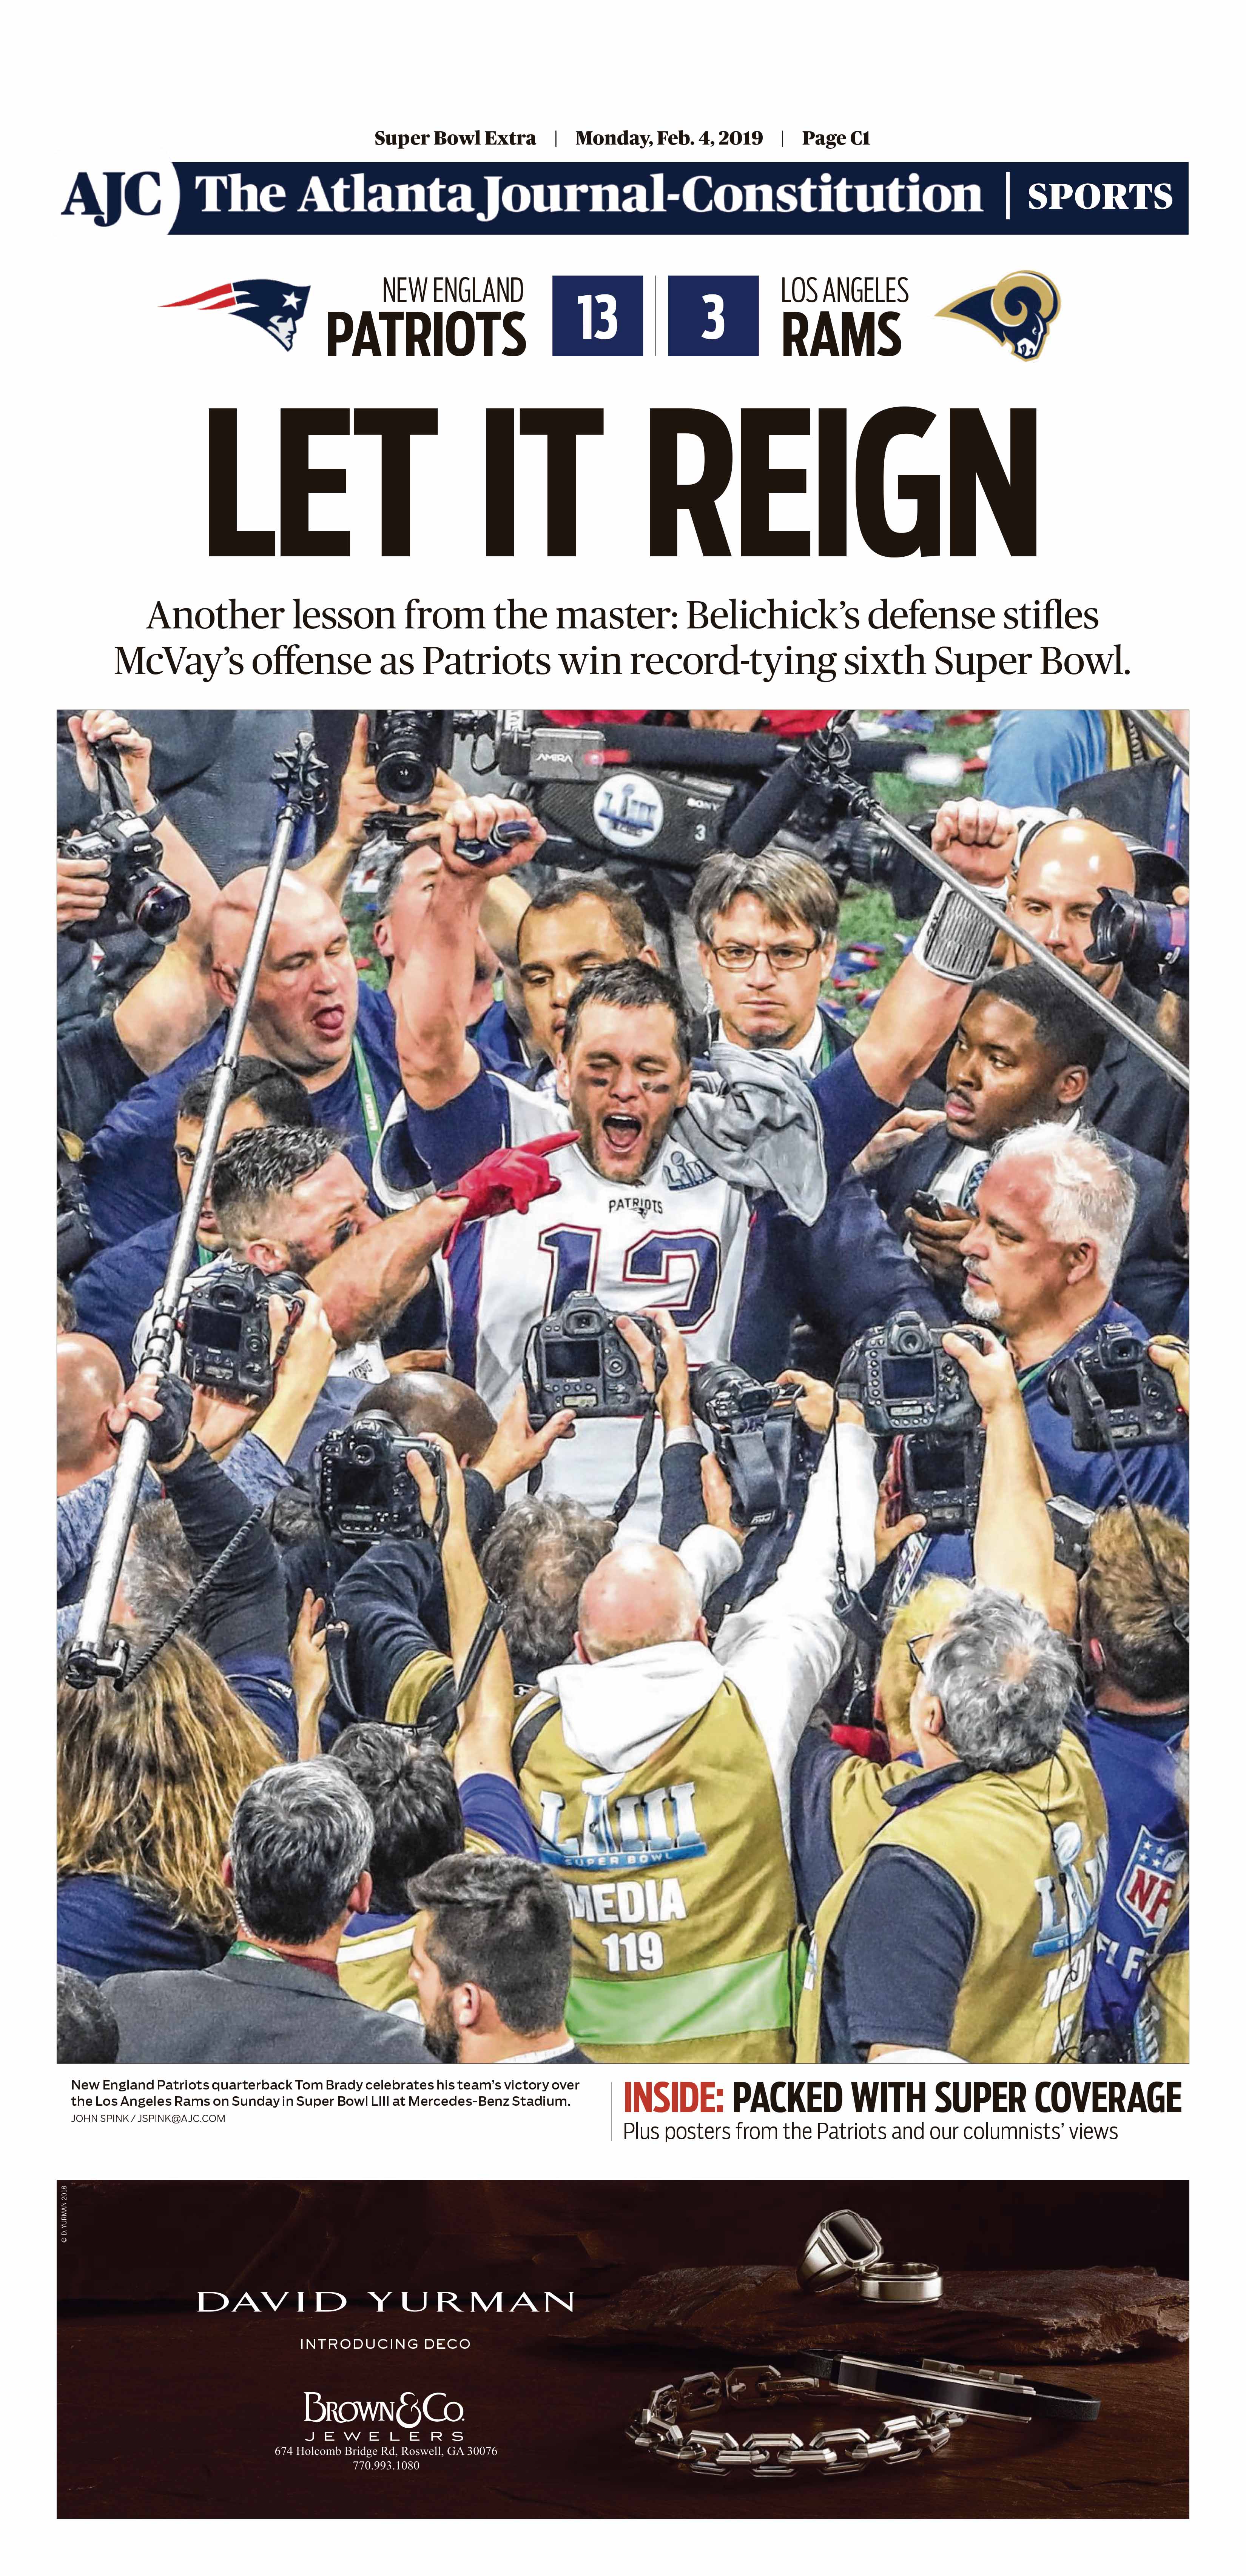 Atlanta Journal-Constitution Sports Page - Super Bowl - John Spink Copyright Photo